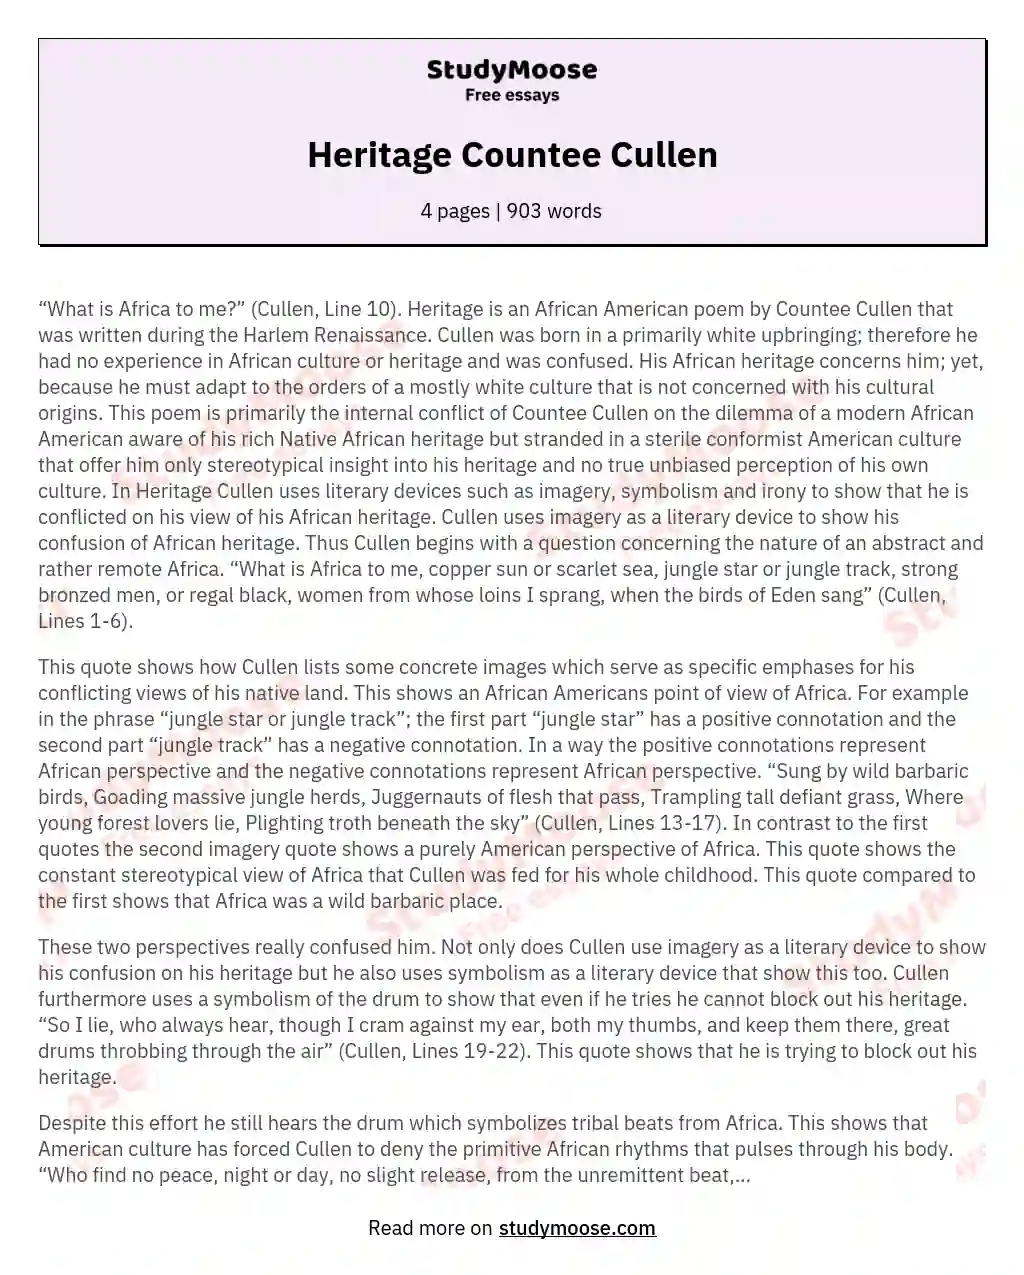 countee cullen heritage